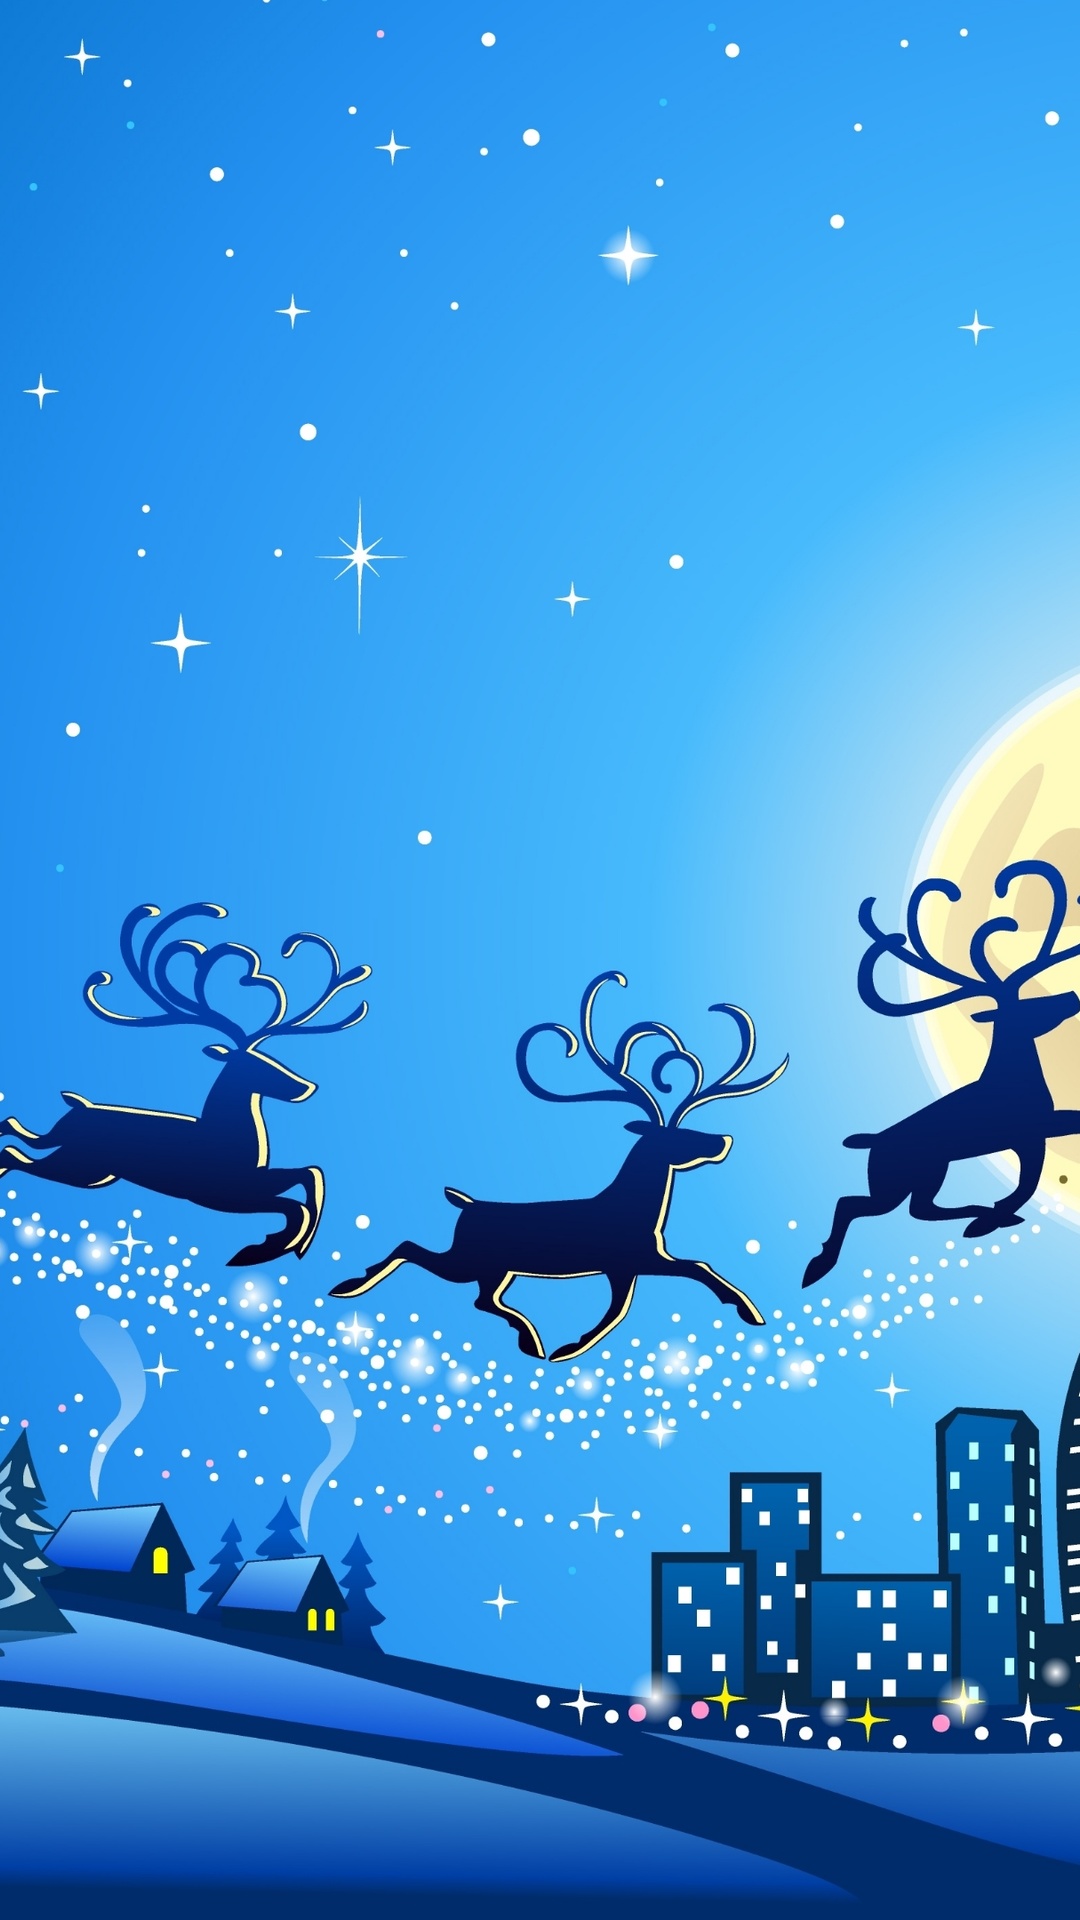 Merry Christmas Wallpaper Iphone - Merry Christmas Wallpaper For Iphone 6 , HD Wallpaper & Backgrounds